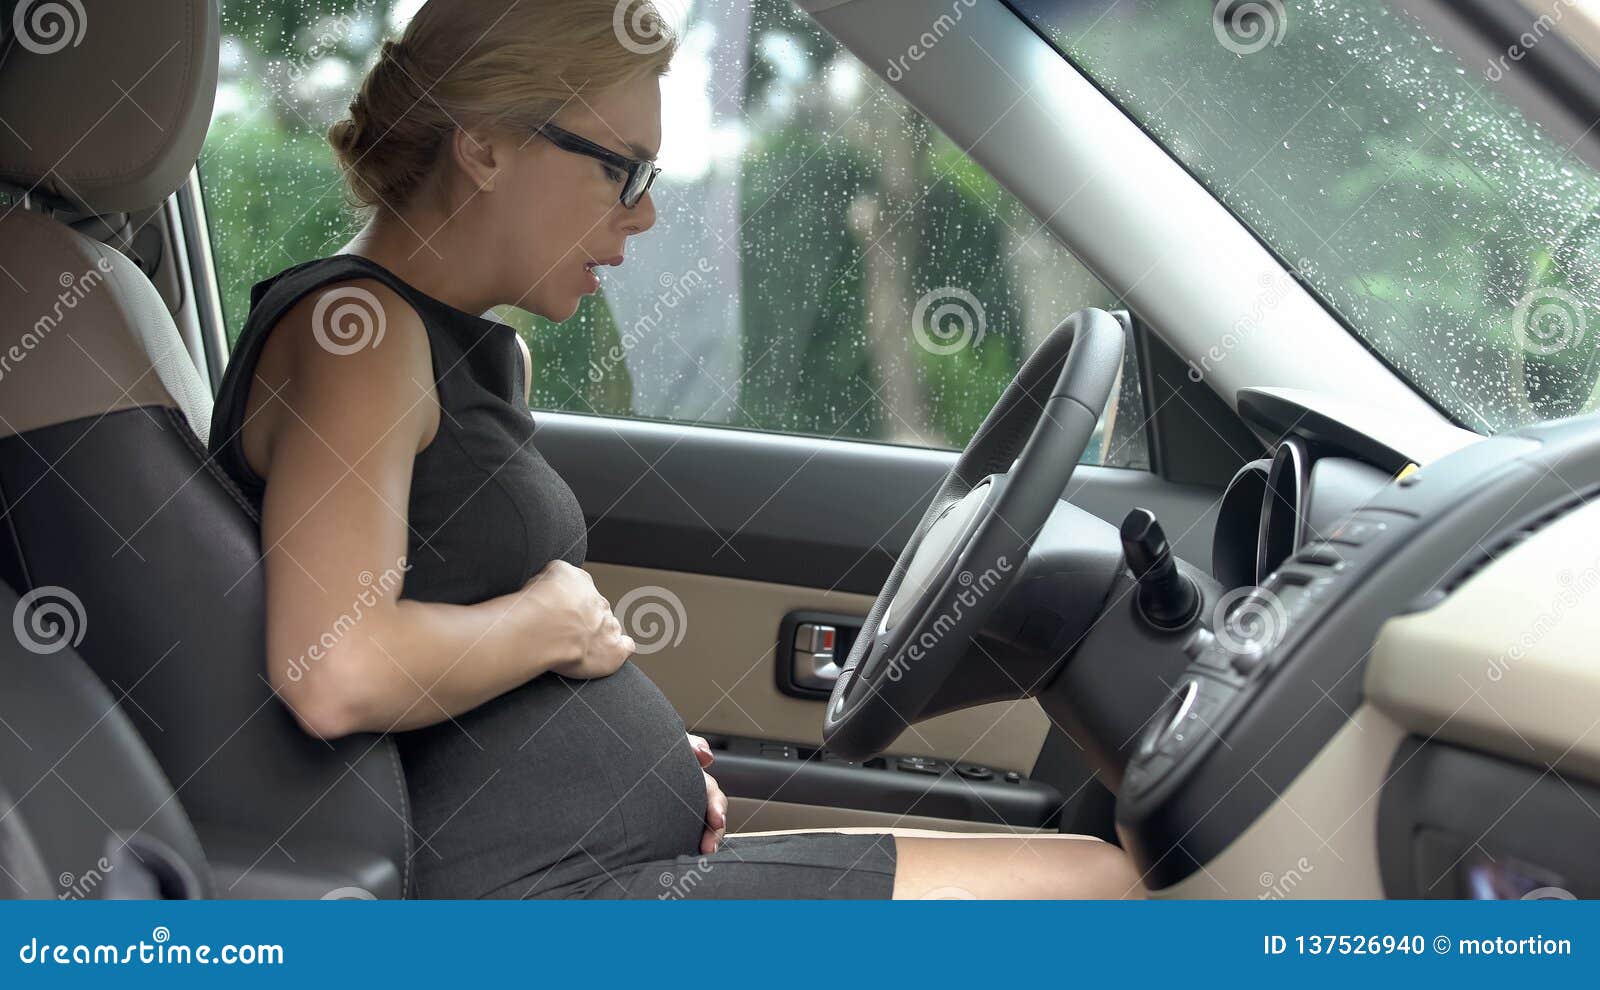 pregnant woman in car hardly breathing, preterm birth, risk of misbirth, health